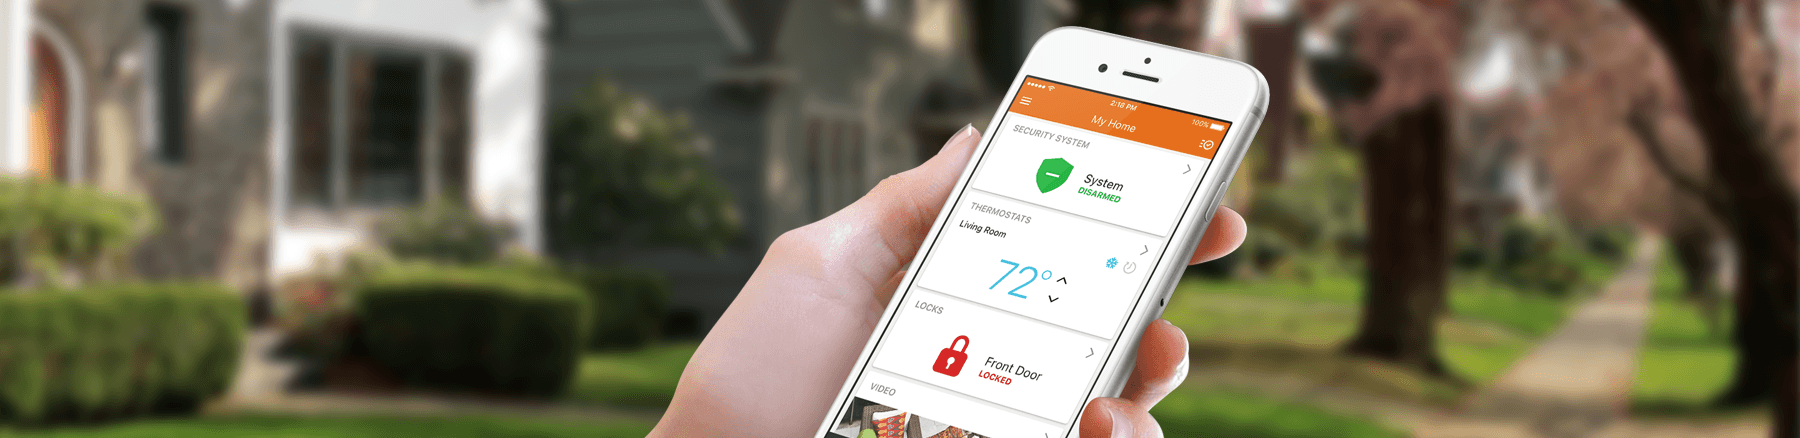 smart phone featuring alarm system app